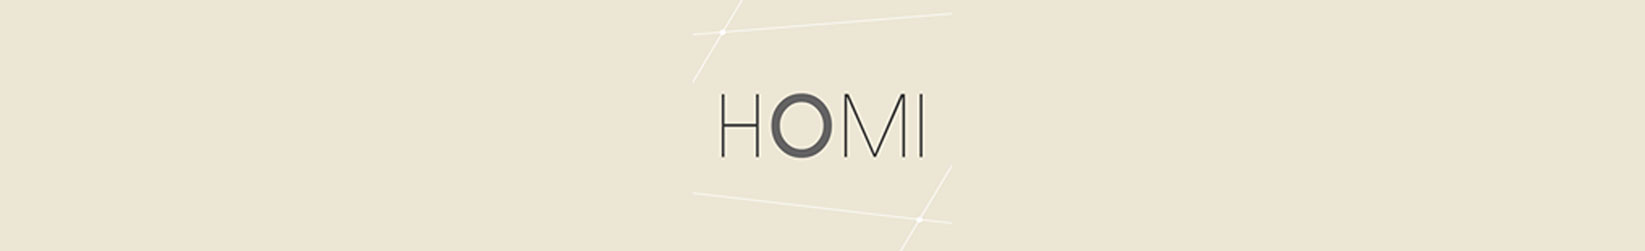 HOMI Milano 2015 |  Italian Goodies Collection